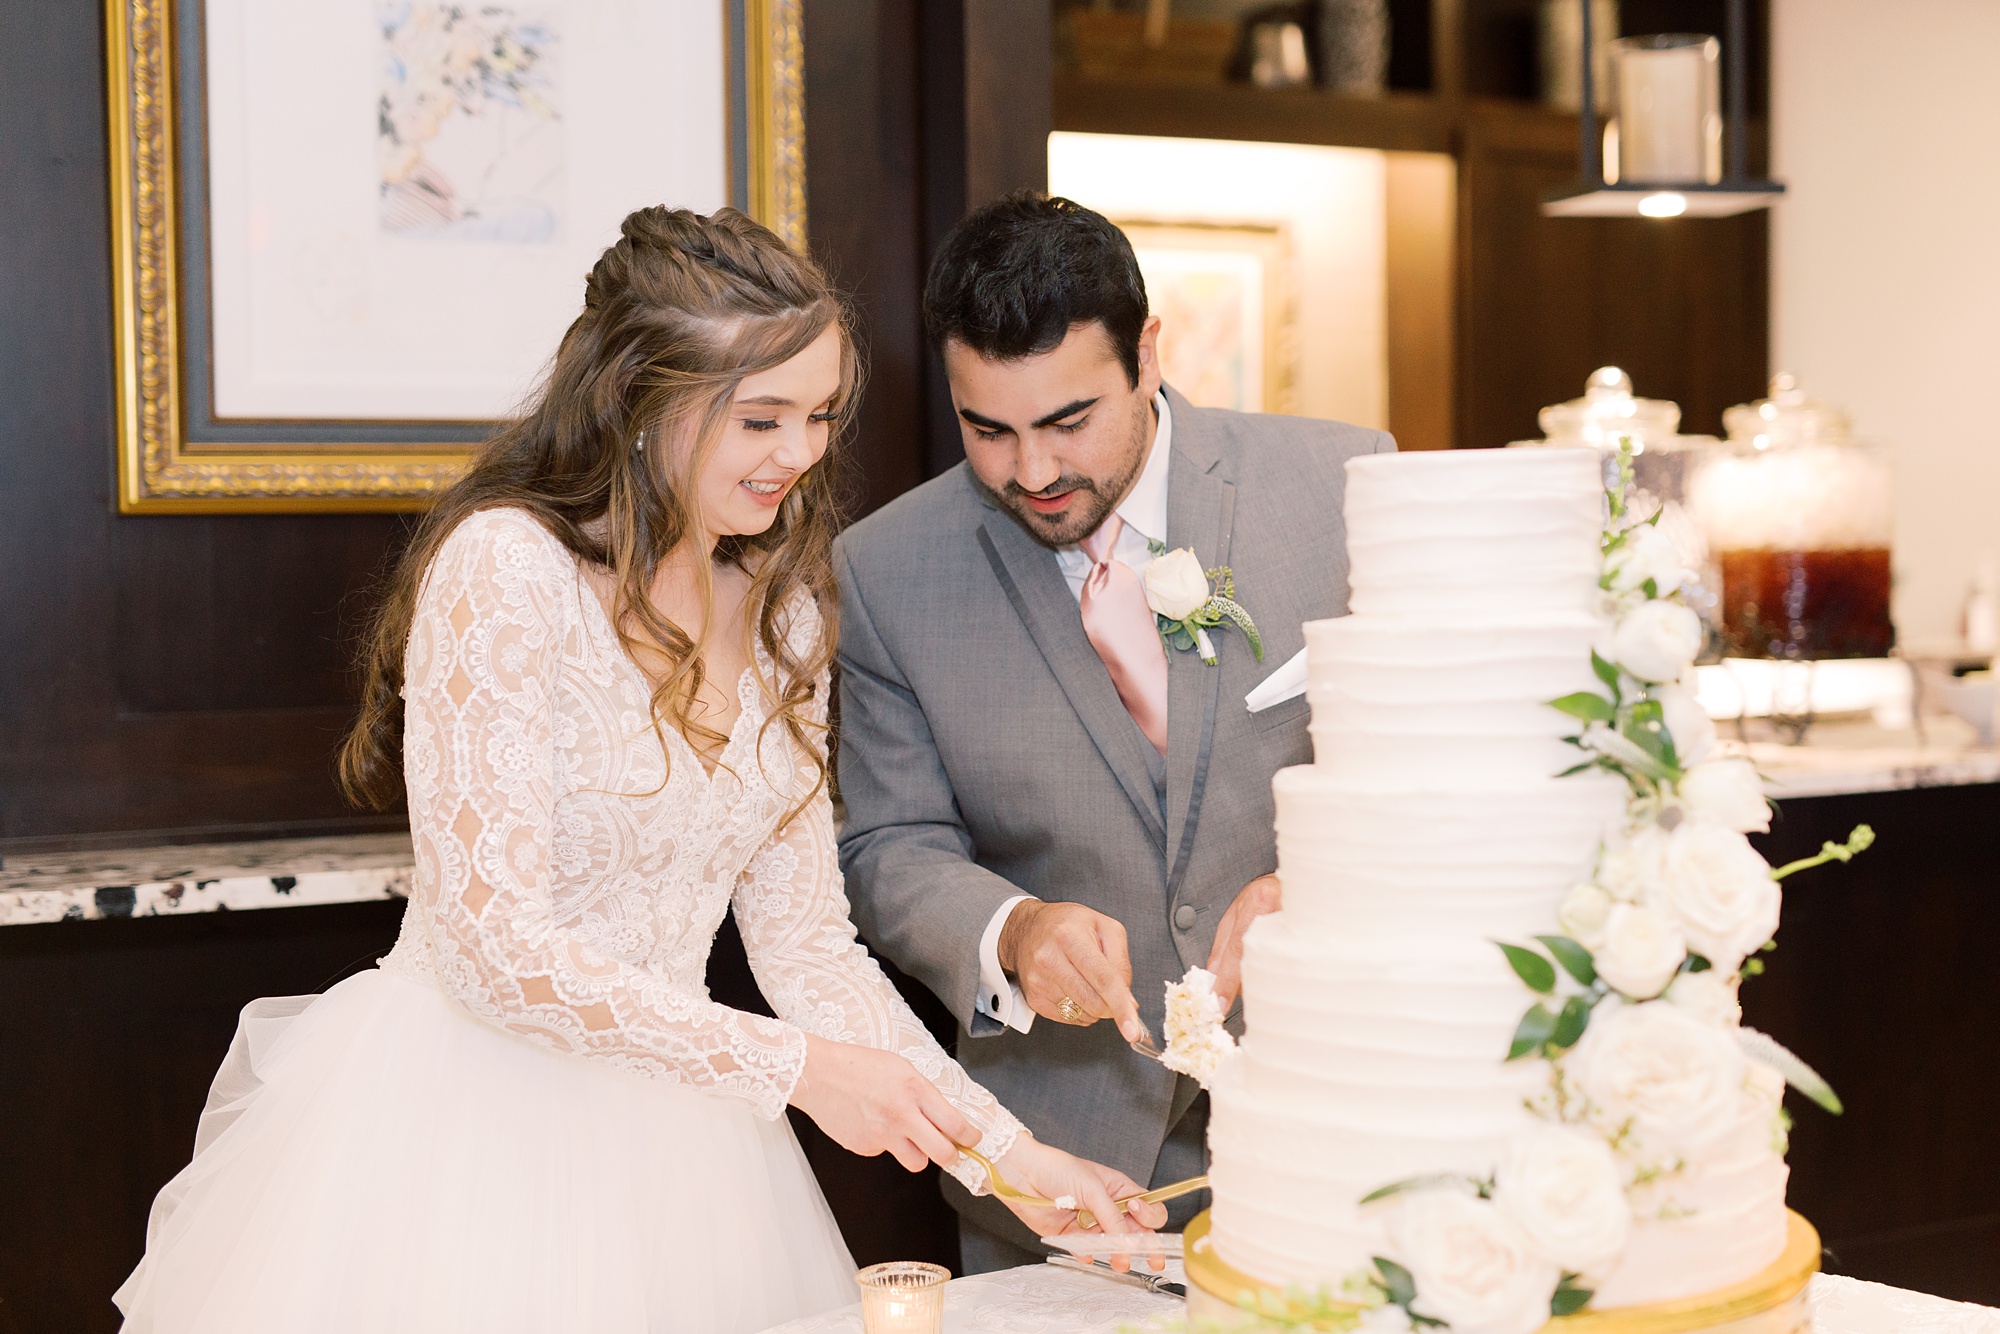 newlyweds cut wedding cake at HighPointe Estate wedding reception